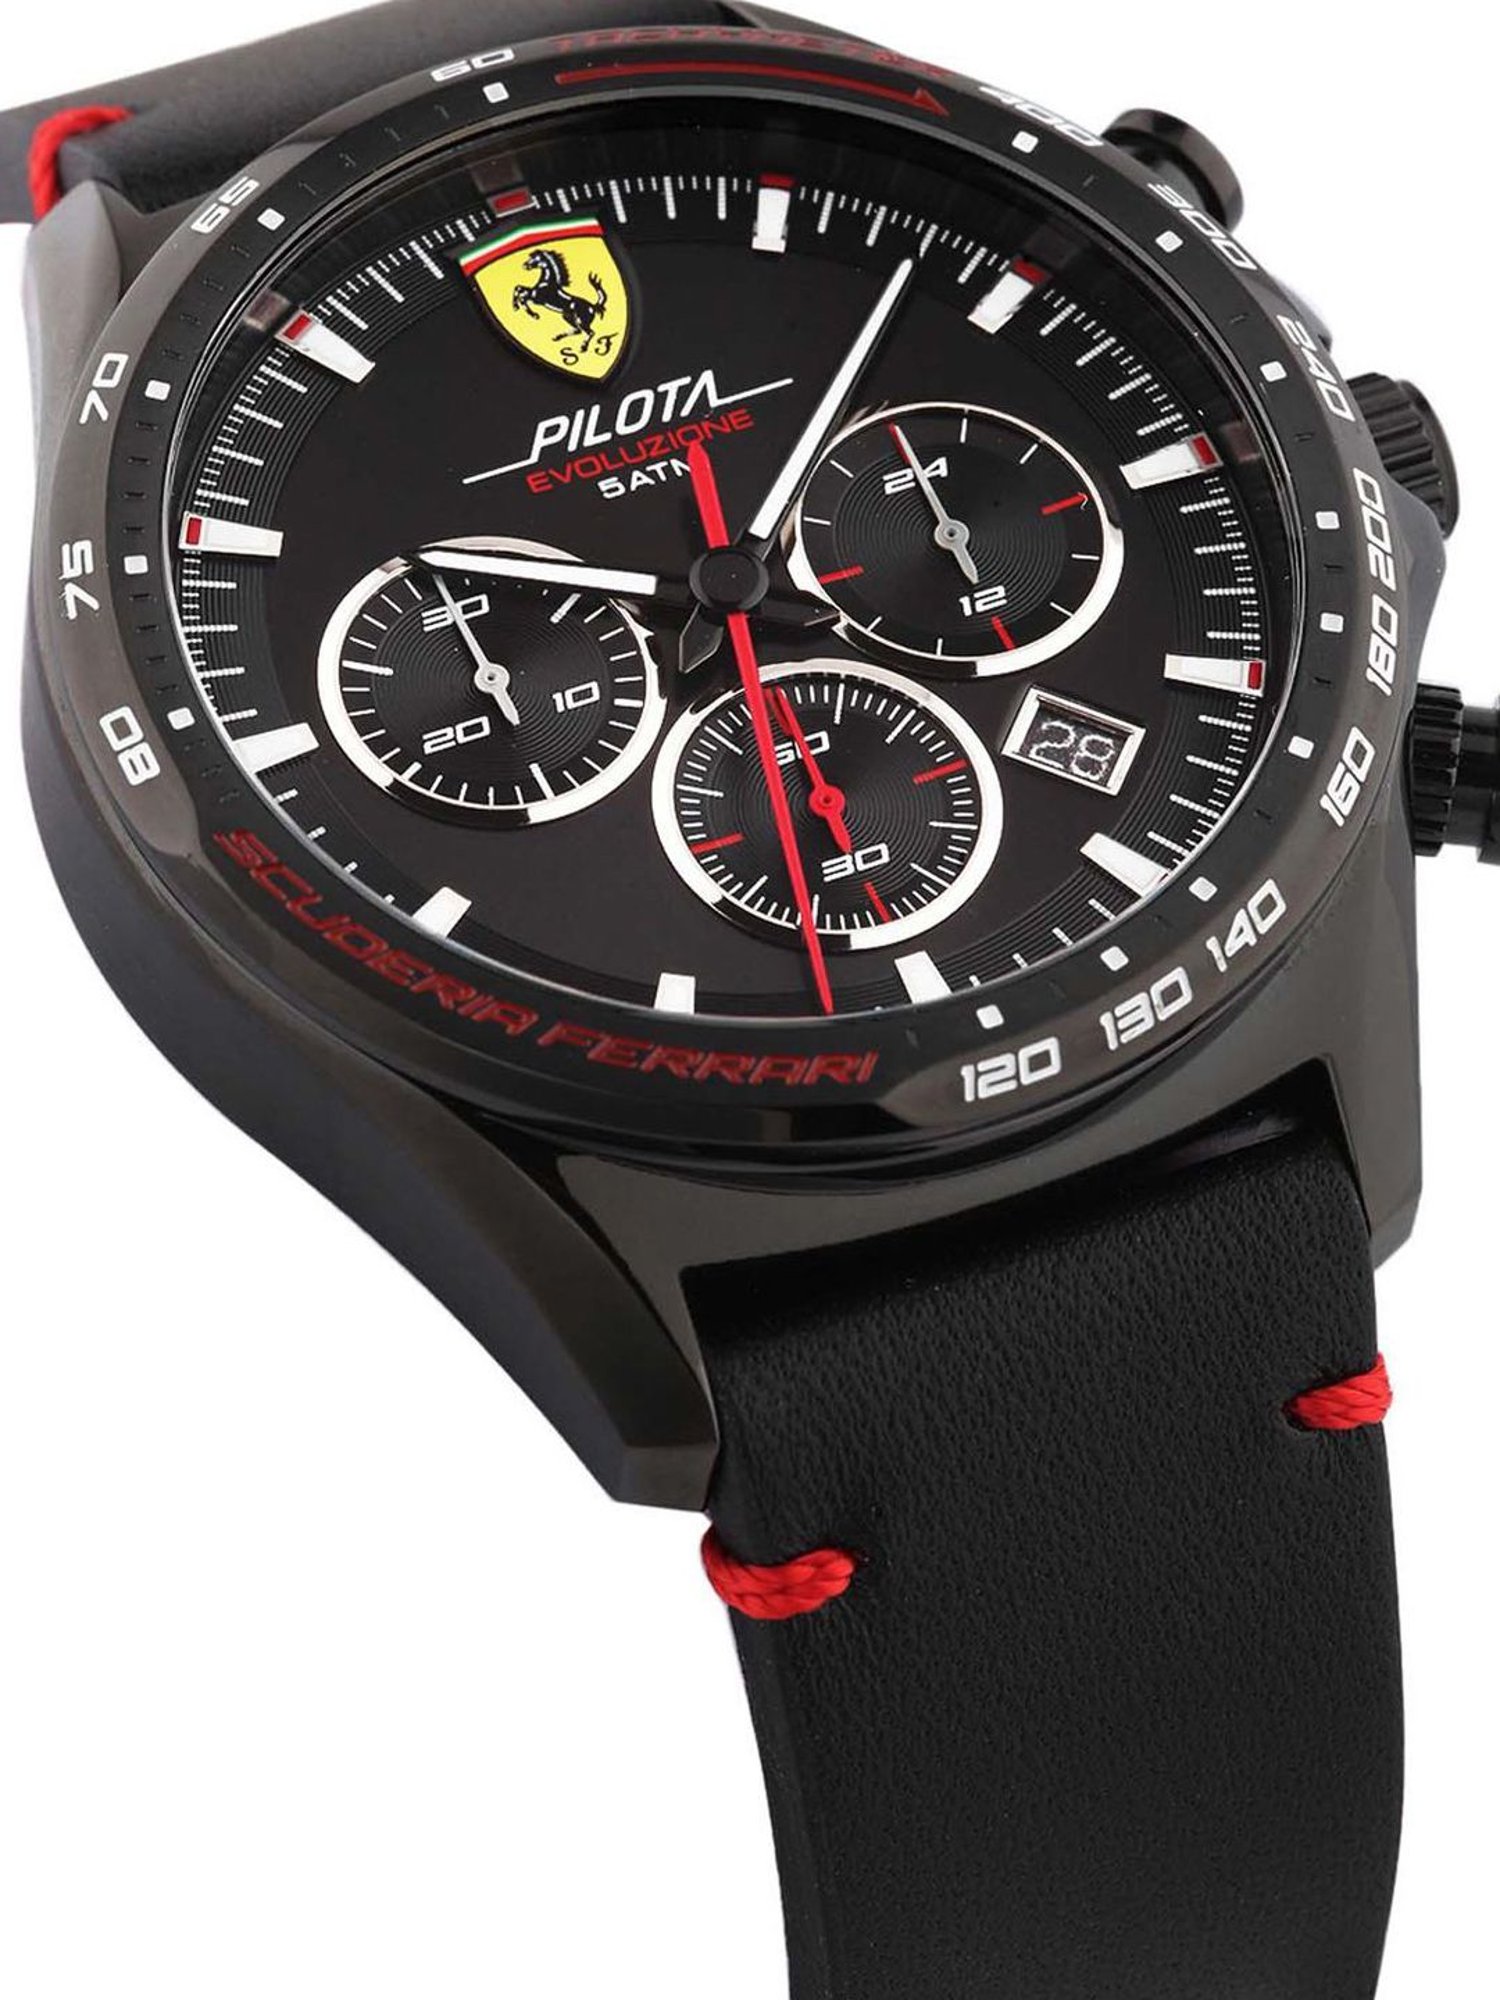 Buy Ferrari 830712 Pilota Evo Analog Watch for Men at Best Price